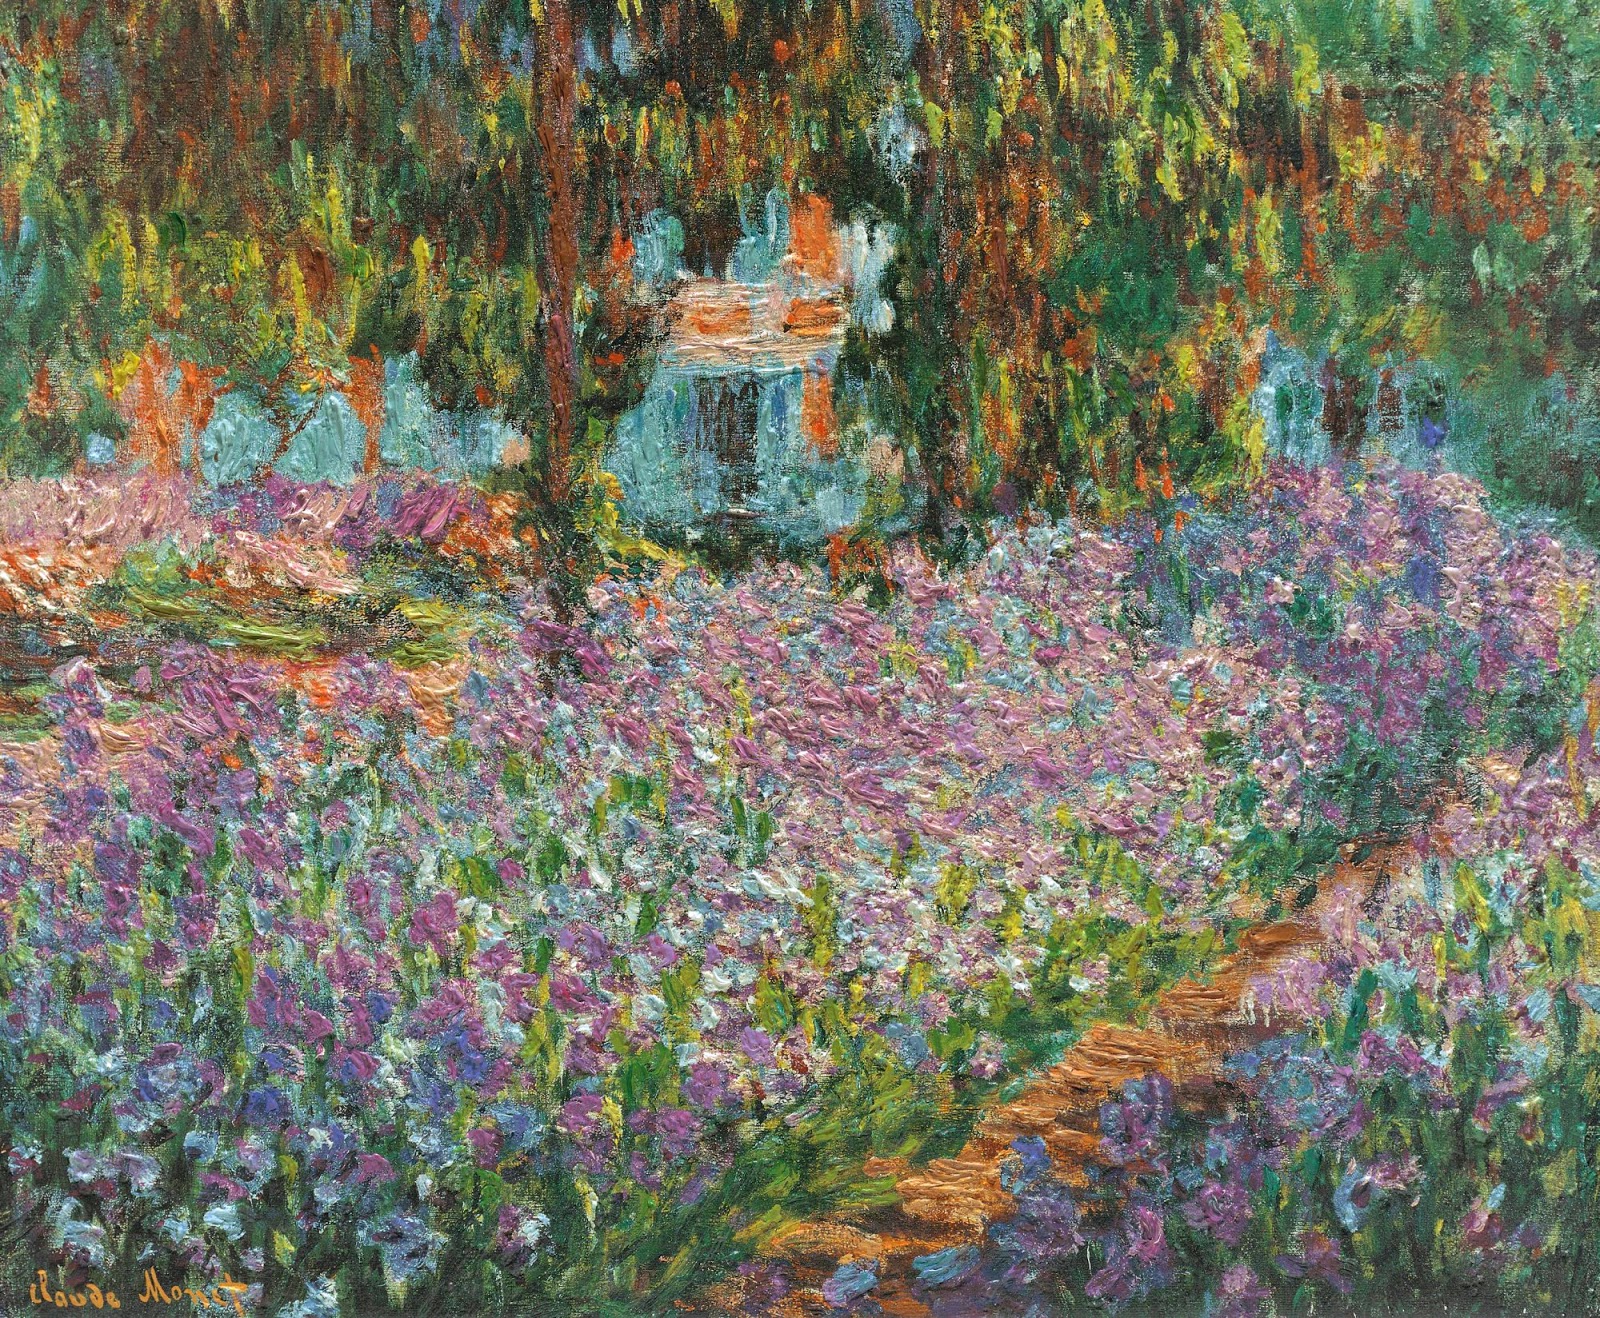 Claude+Monet-1840-1926 (335).jpg